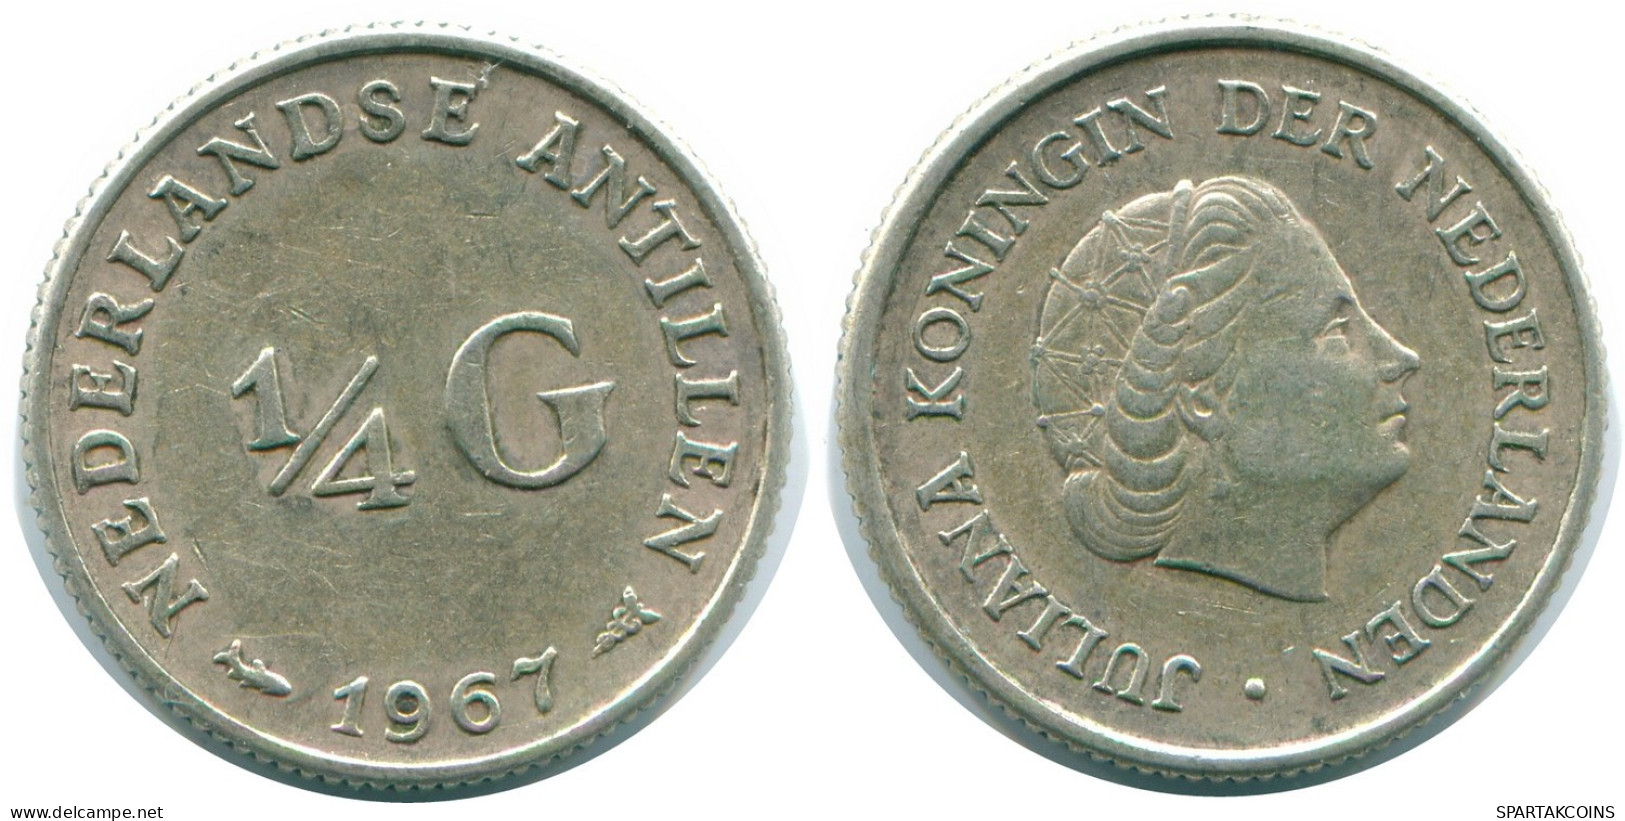 1/4 GULDEN 1967 NETHERLANDS ANTILLES SILVER Colonial Coin #NL11528.4.U.A - Antille Olandesi